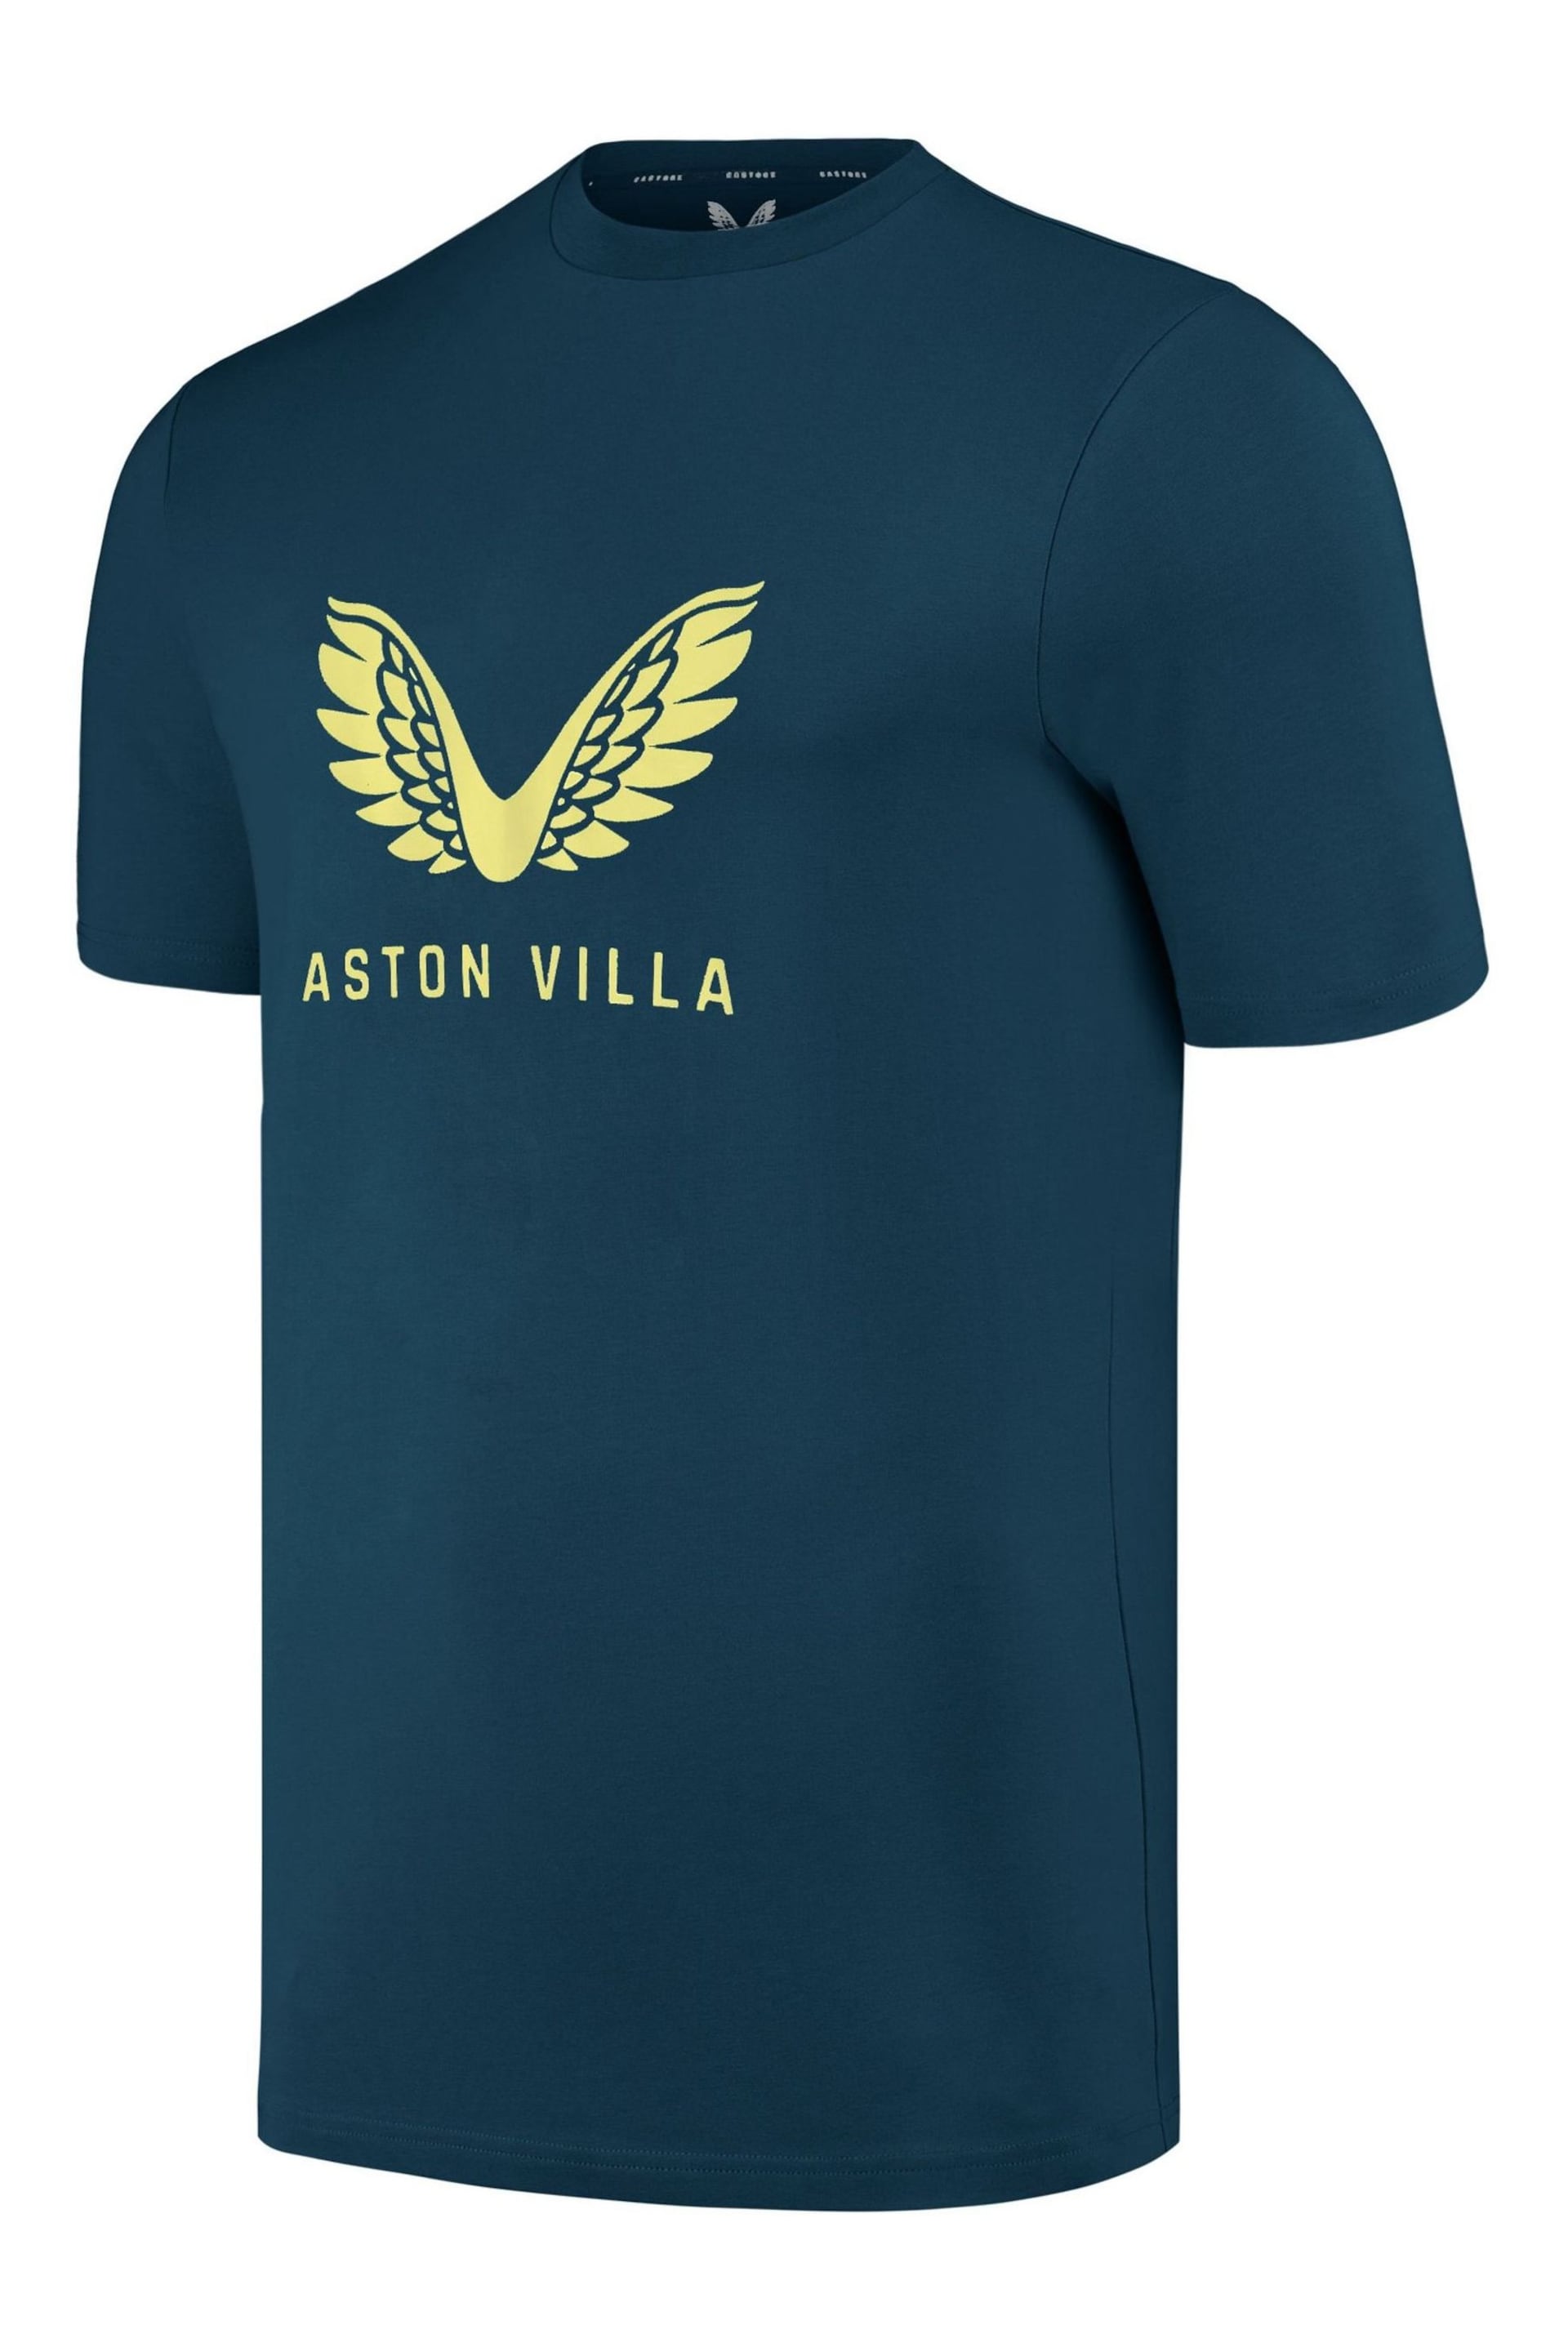 Castore Blue Aston Villa Players Travel T-Shirt - Image 2 of 3